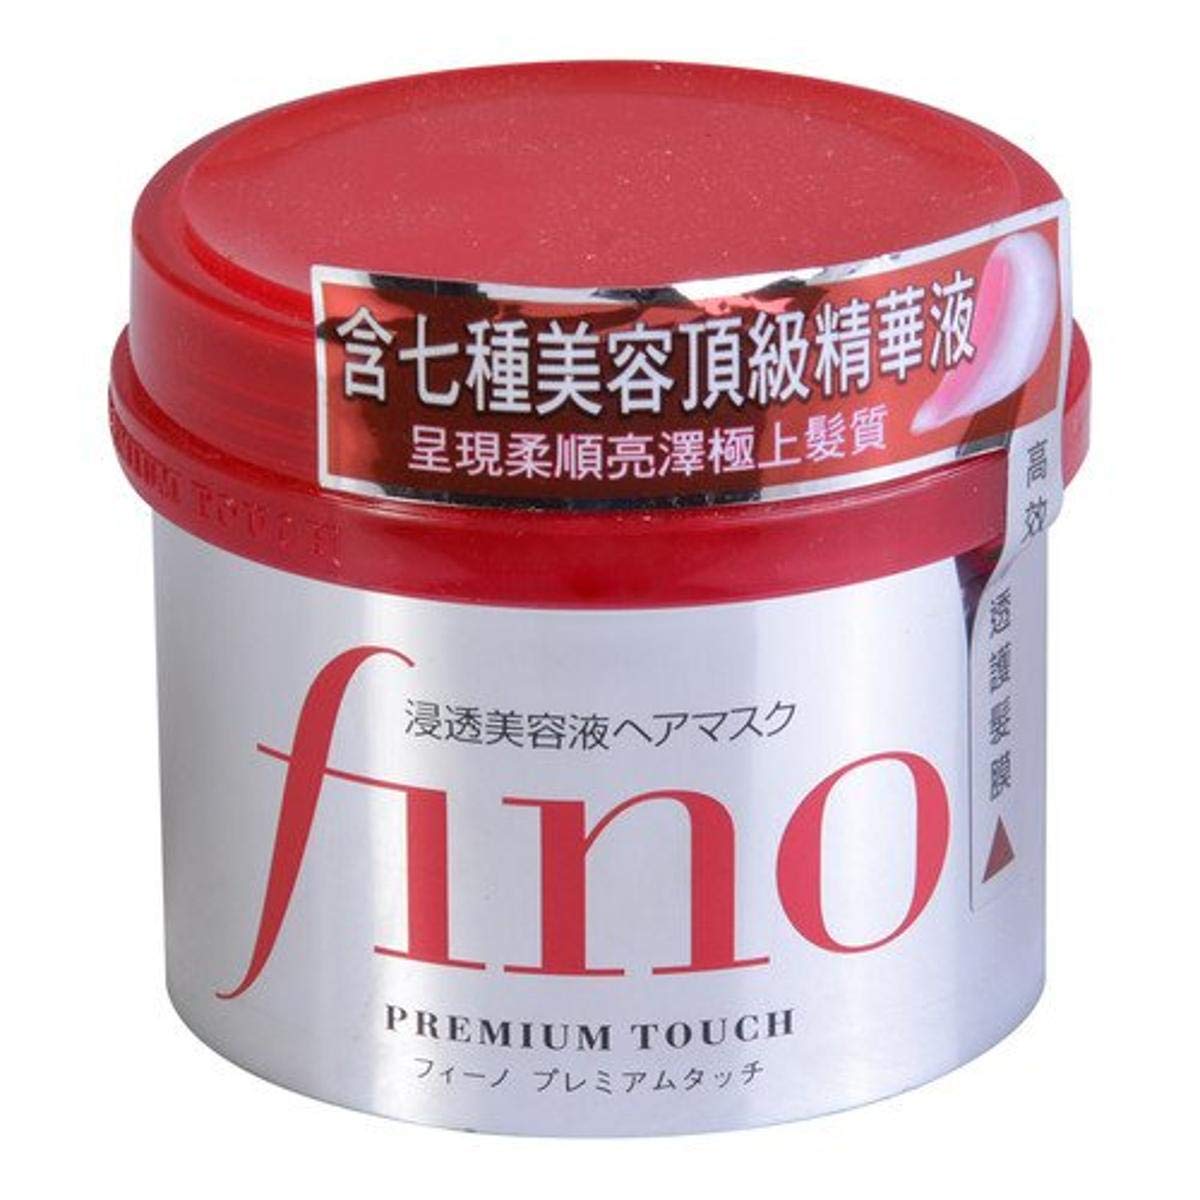 Shiseido Fino Premium Touch Hair Mask 230 g (Taiwan Version)